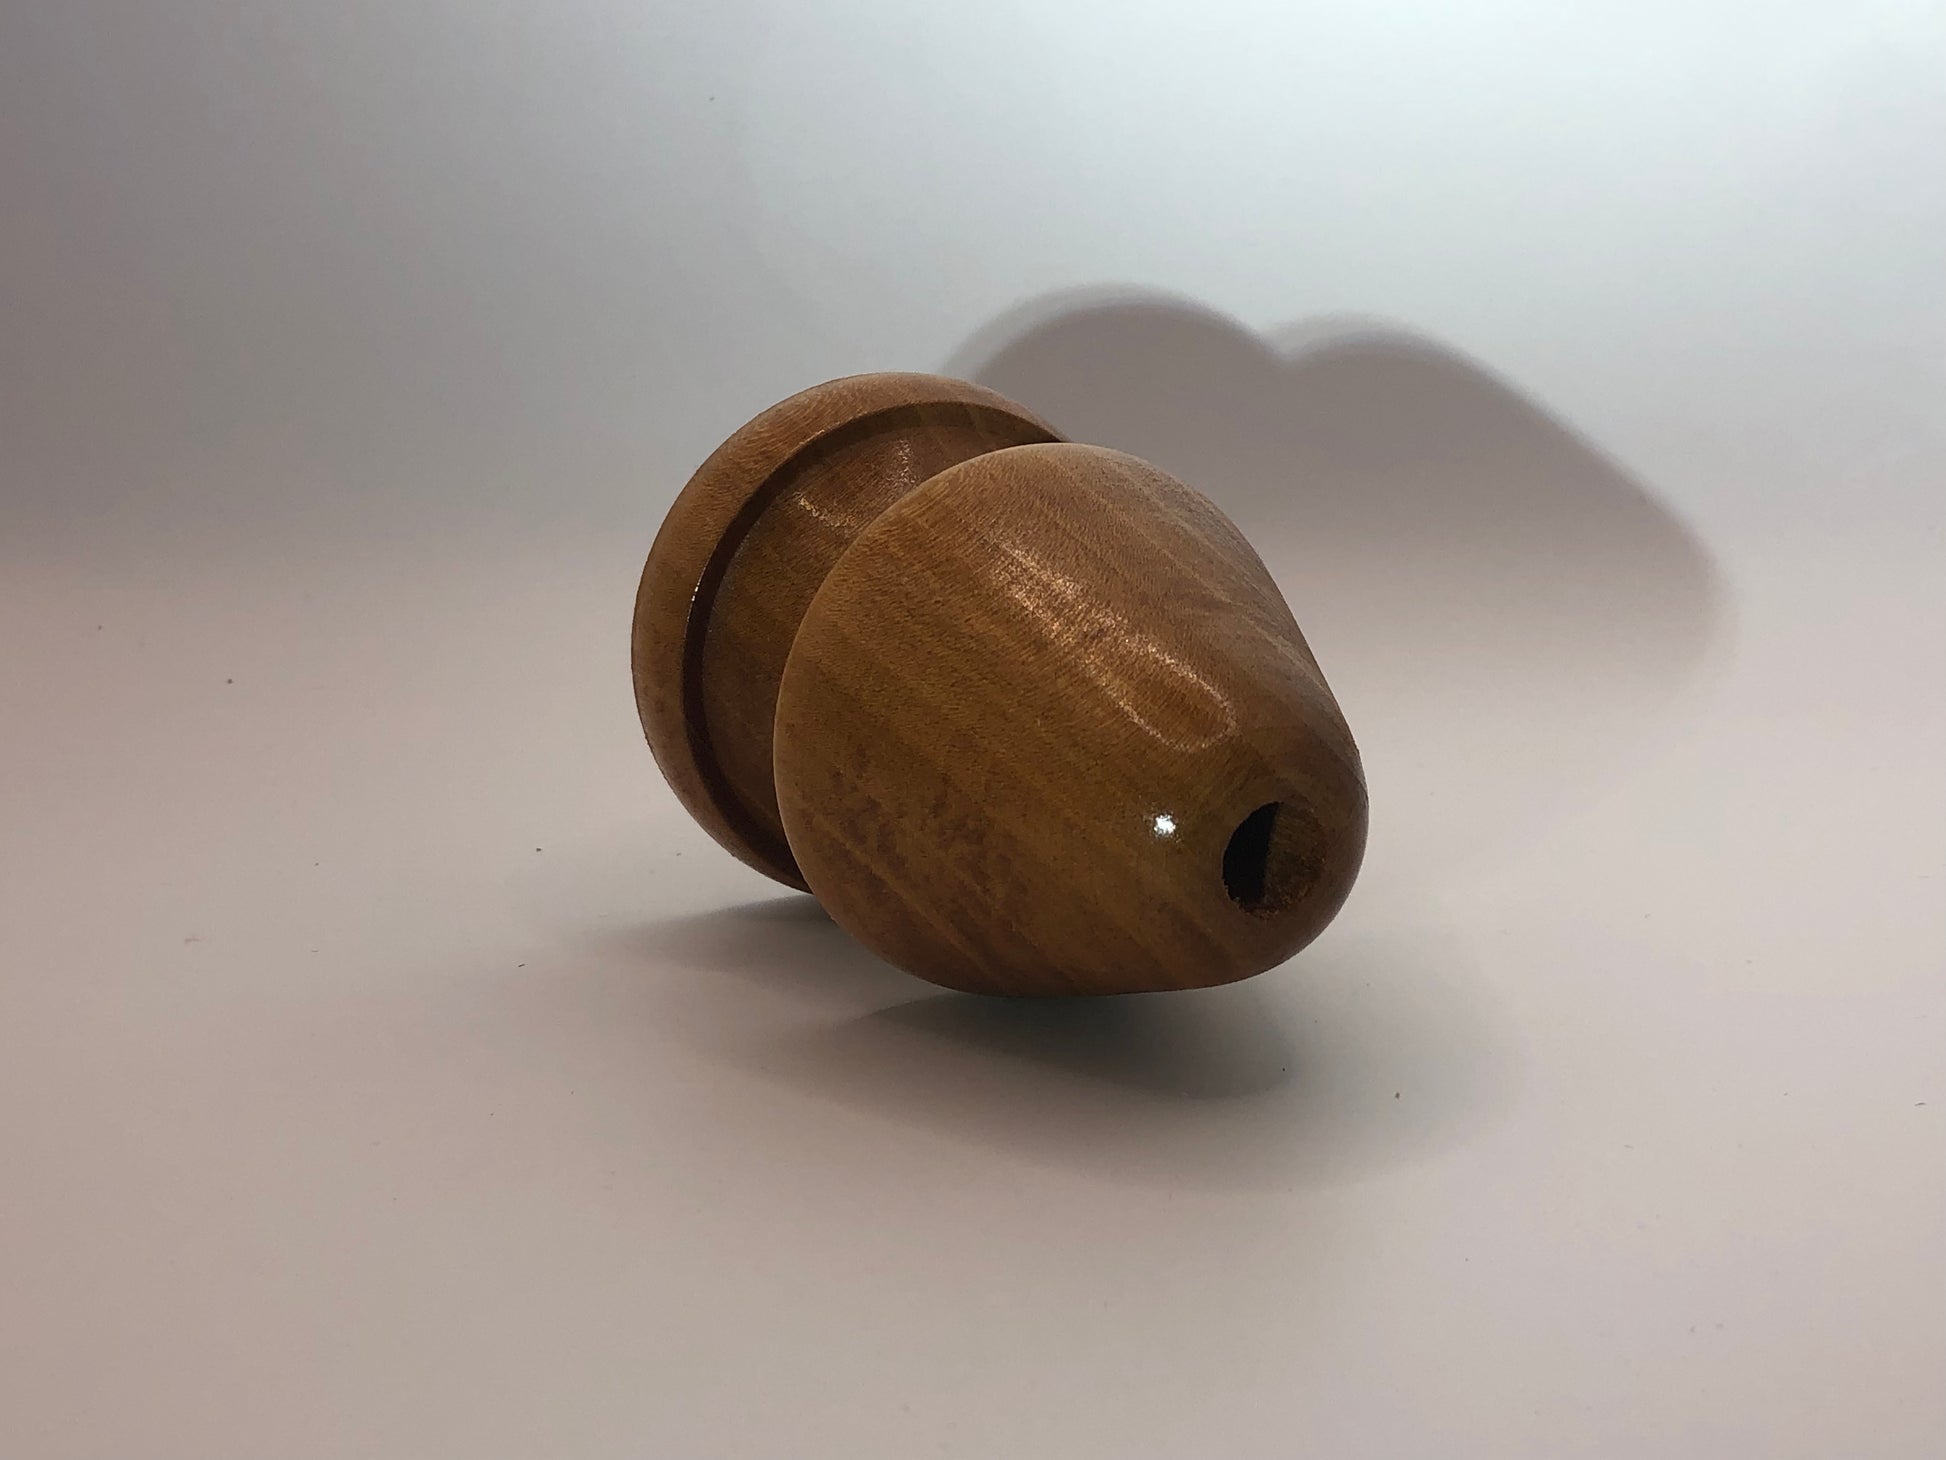 Vase original minimaliste forme champignon soliflore en bois de merisier vue dessus